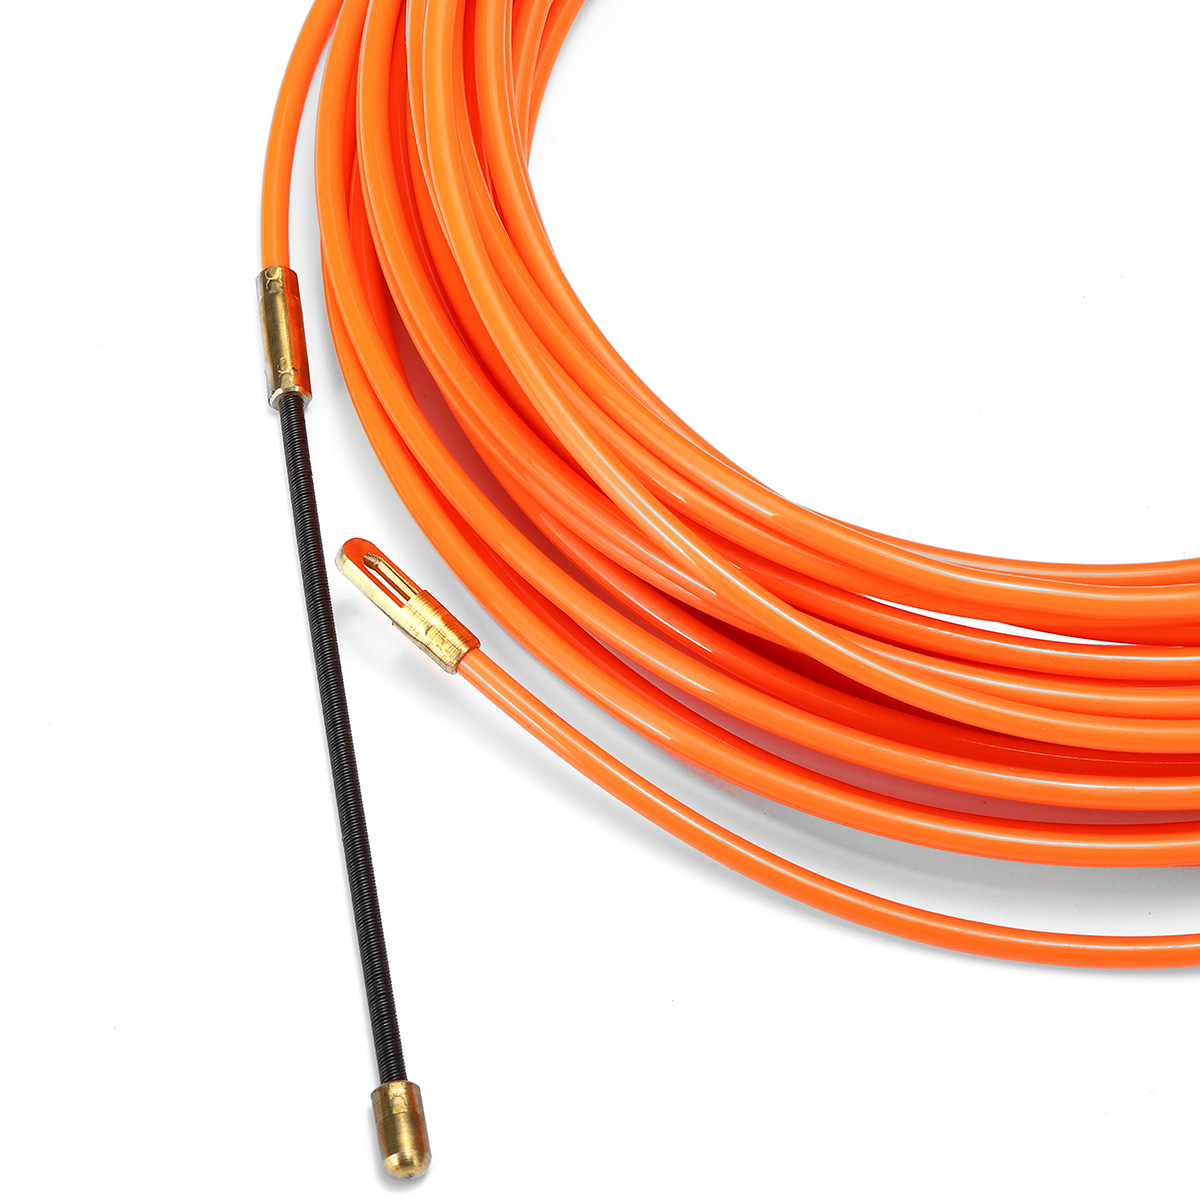 Cable-Push-Puller-Reel-Conduit-Nylon-Snake-Fish-Tape-Wire-Orange-4mm-15m-1379495-6